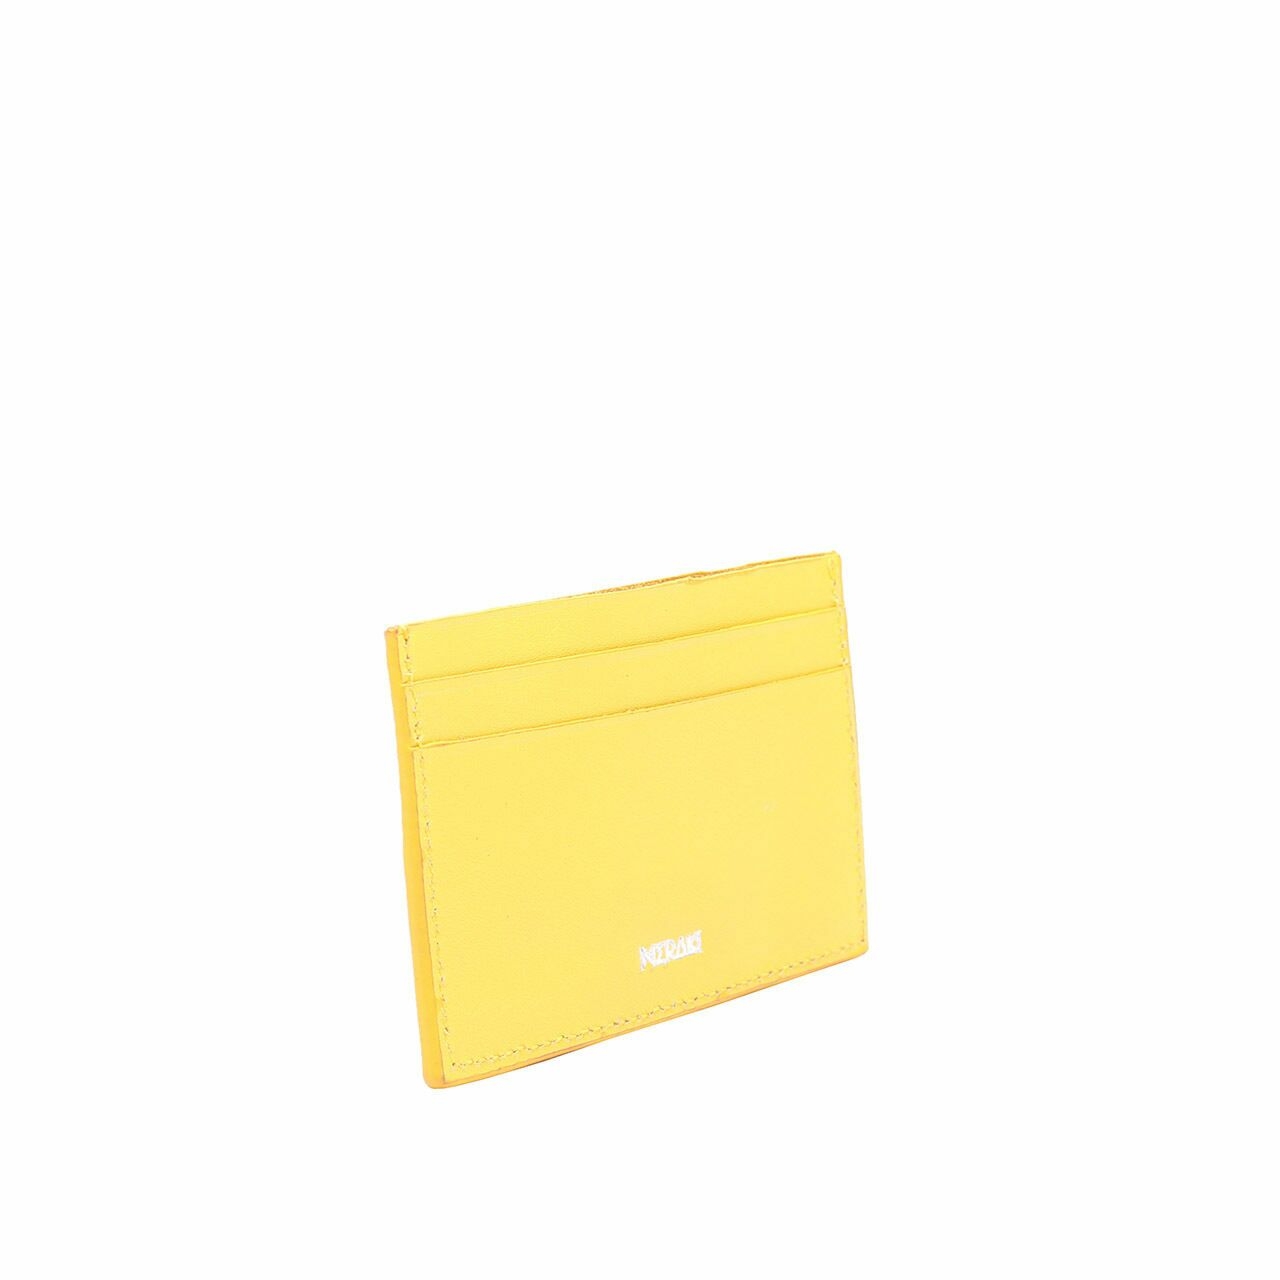 Meraki Goods Slim Yellow Wallet